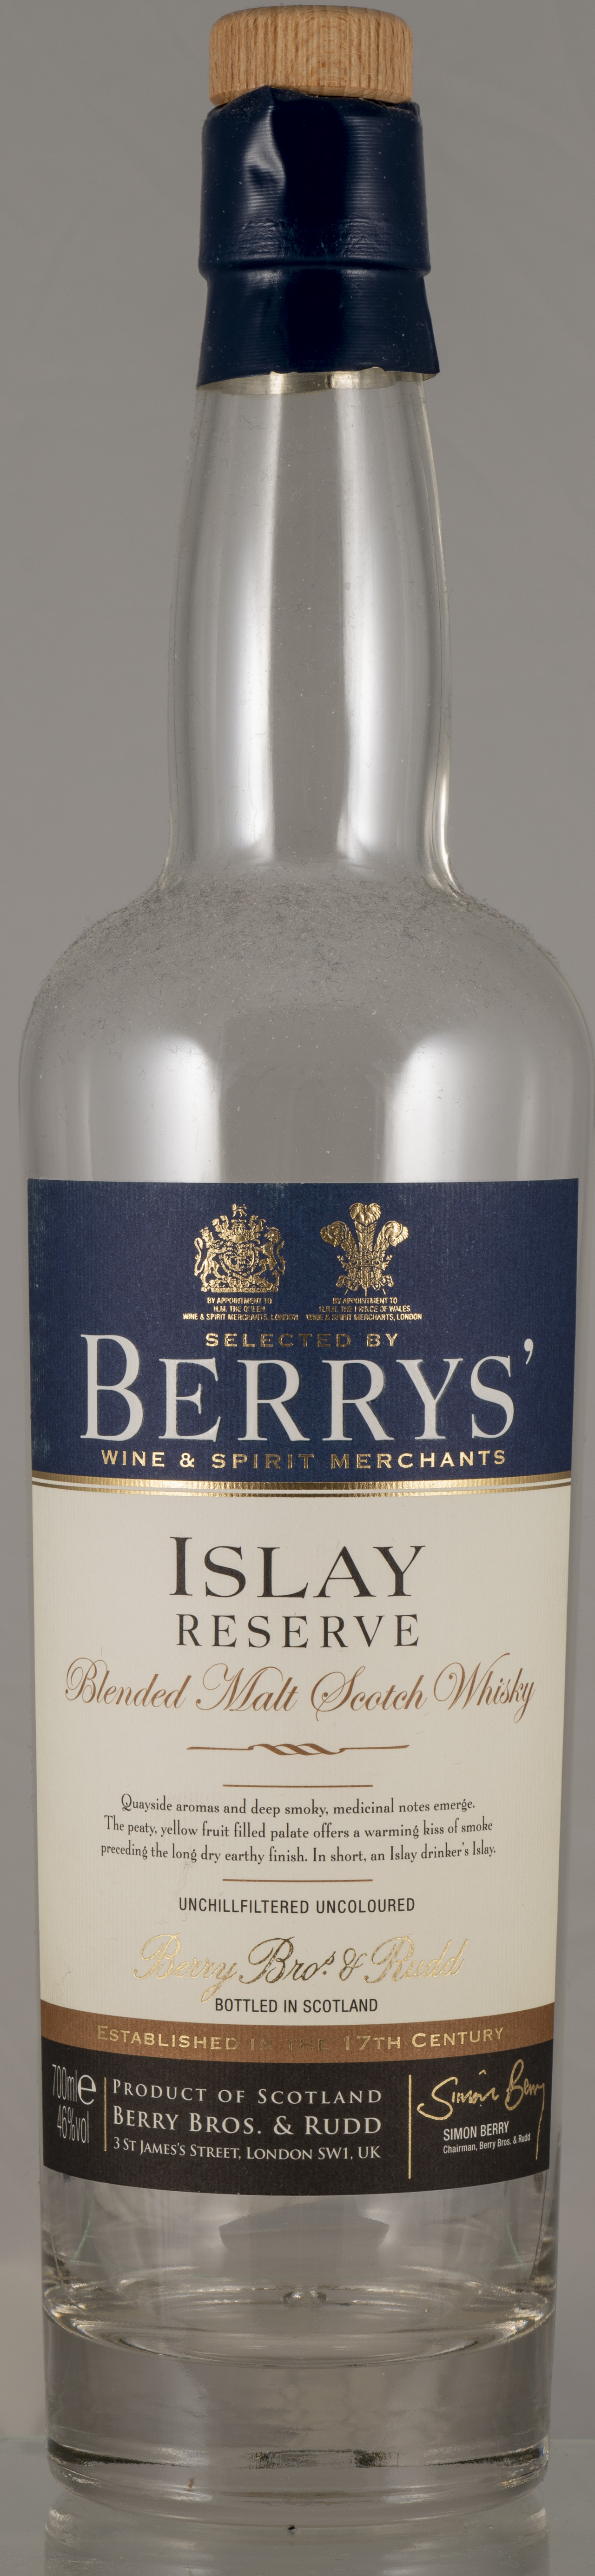 Billede: PHC_7135 - Berrys - Islay Reserve - bottle front.jpg